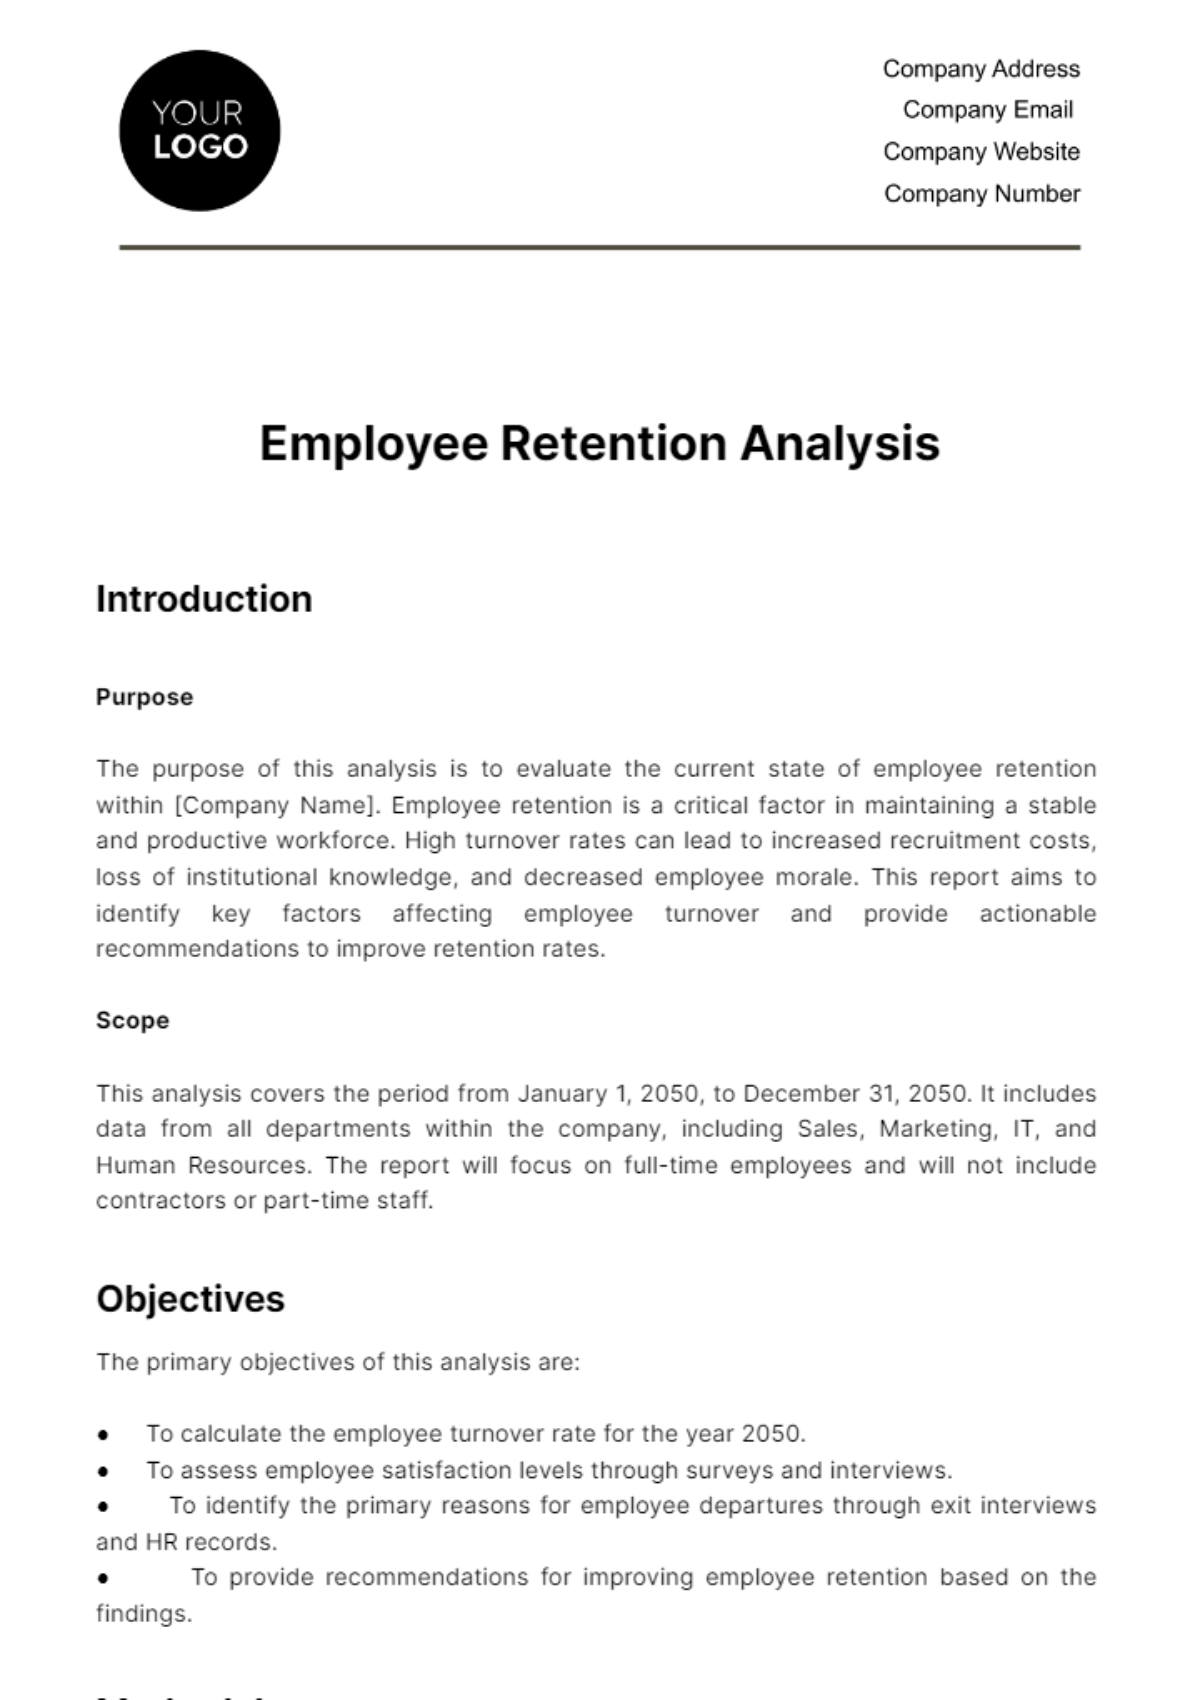 Employee Retention Analysis HR Template